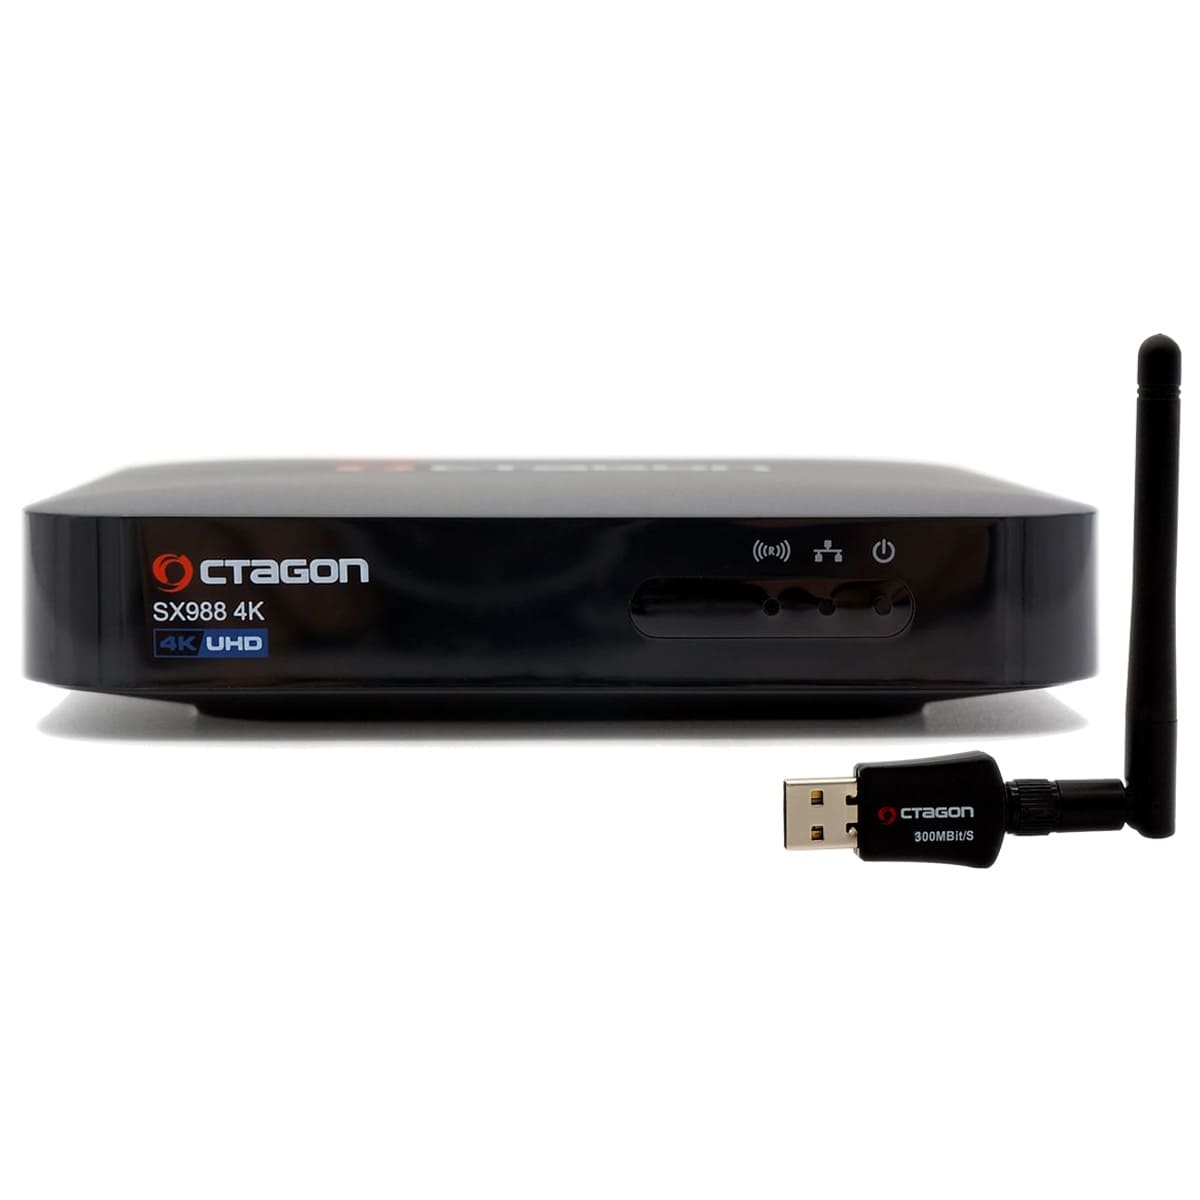 OCTAGON SX988 Mbit/s GB Wifi IP 8 300